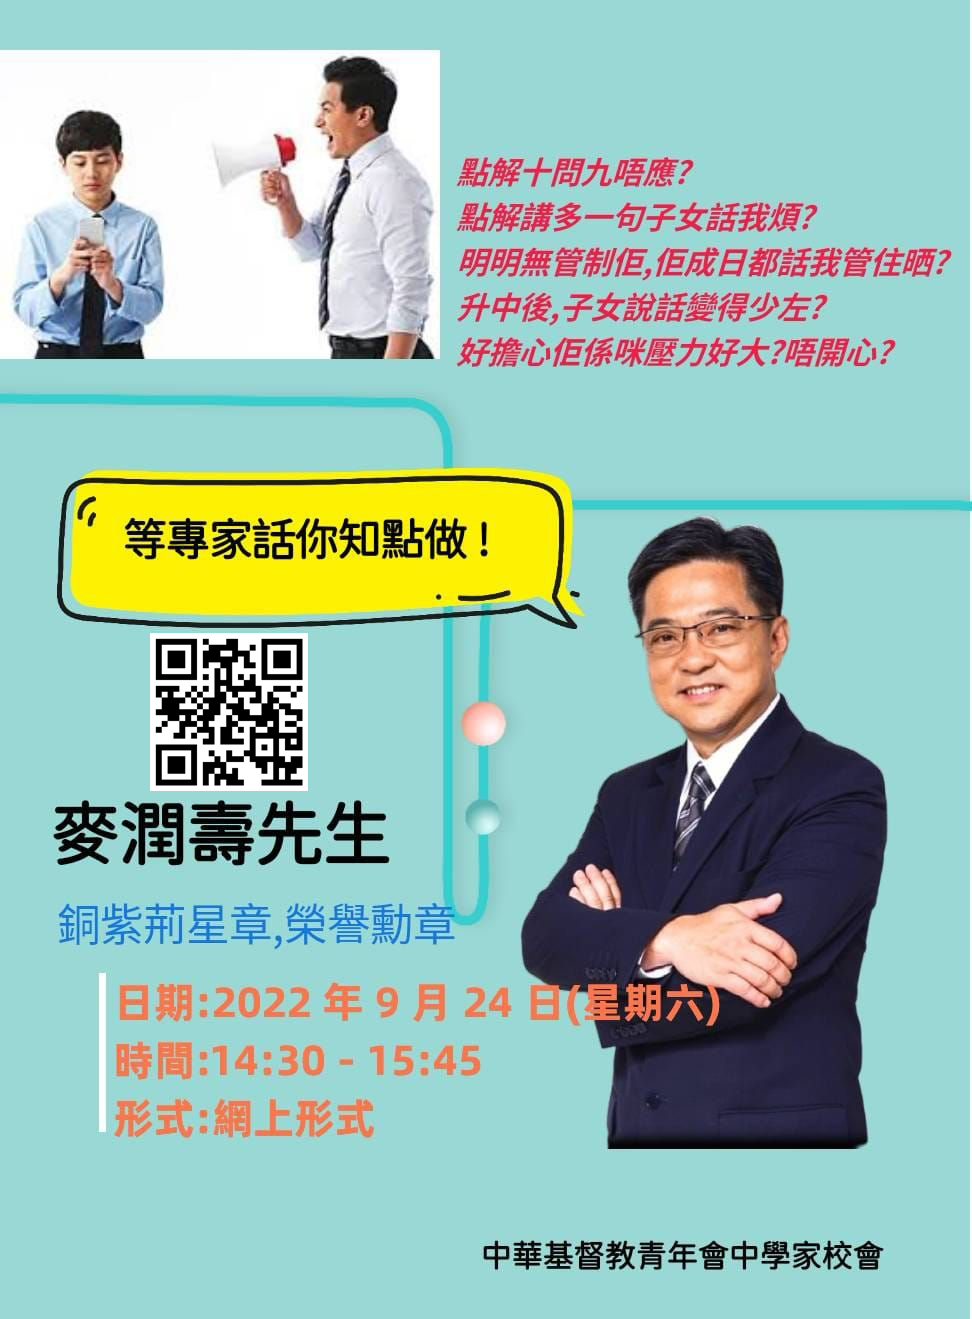 Parent-Child Seminar-Date: Saturday, 24th September 2022 (Mr.Francis Mak Yun Sau)